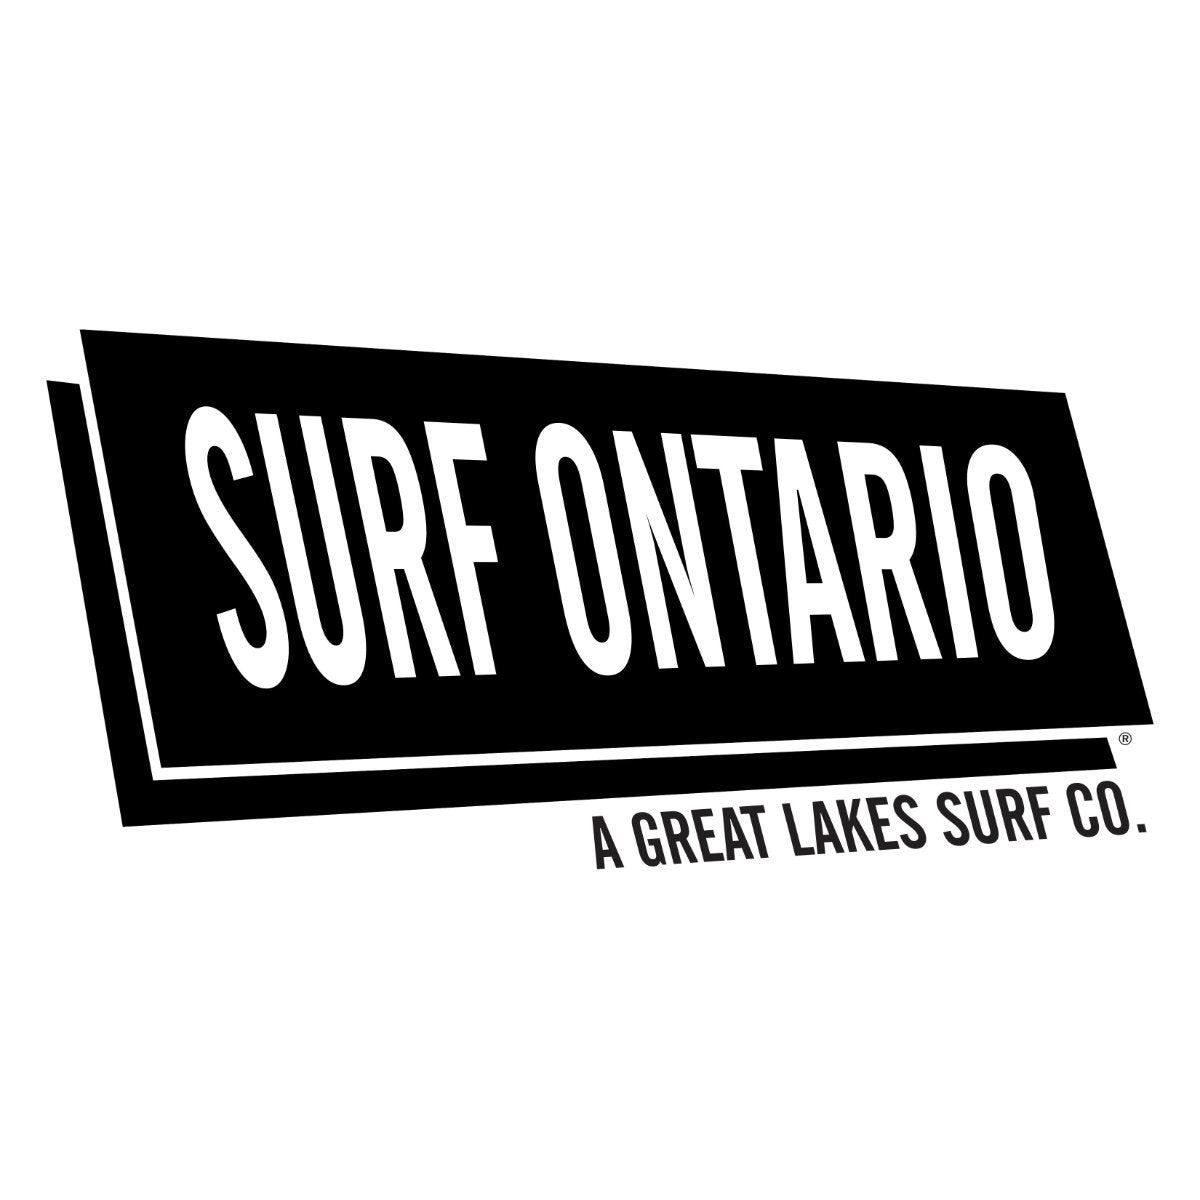 
                  
                    Vissla Vintage Surf Ontario T-Shirt - White
                  
                